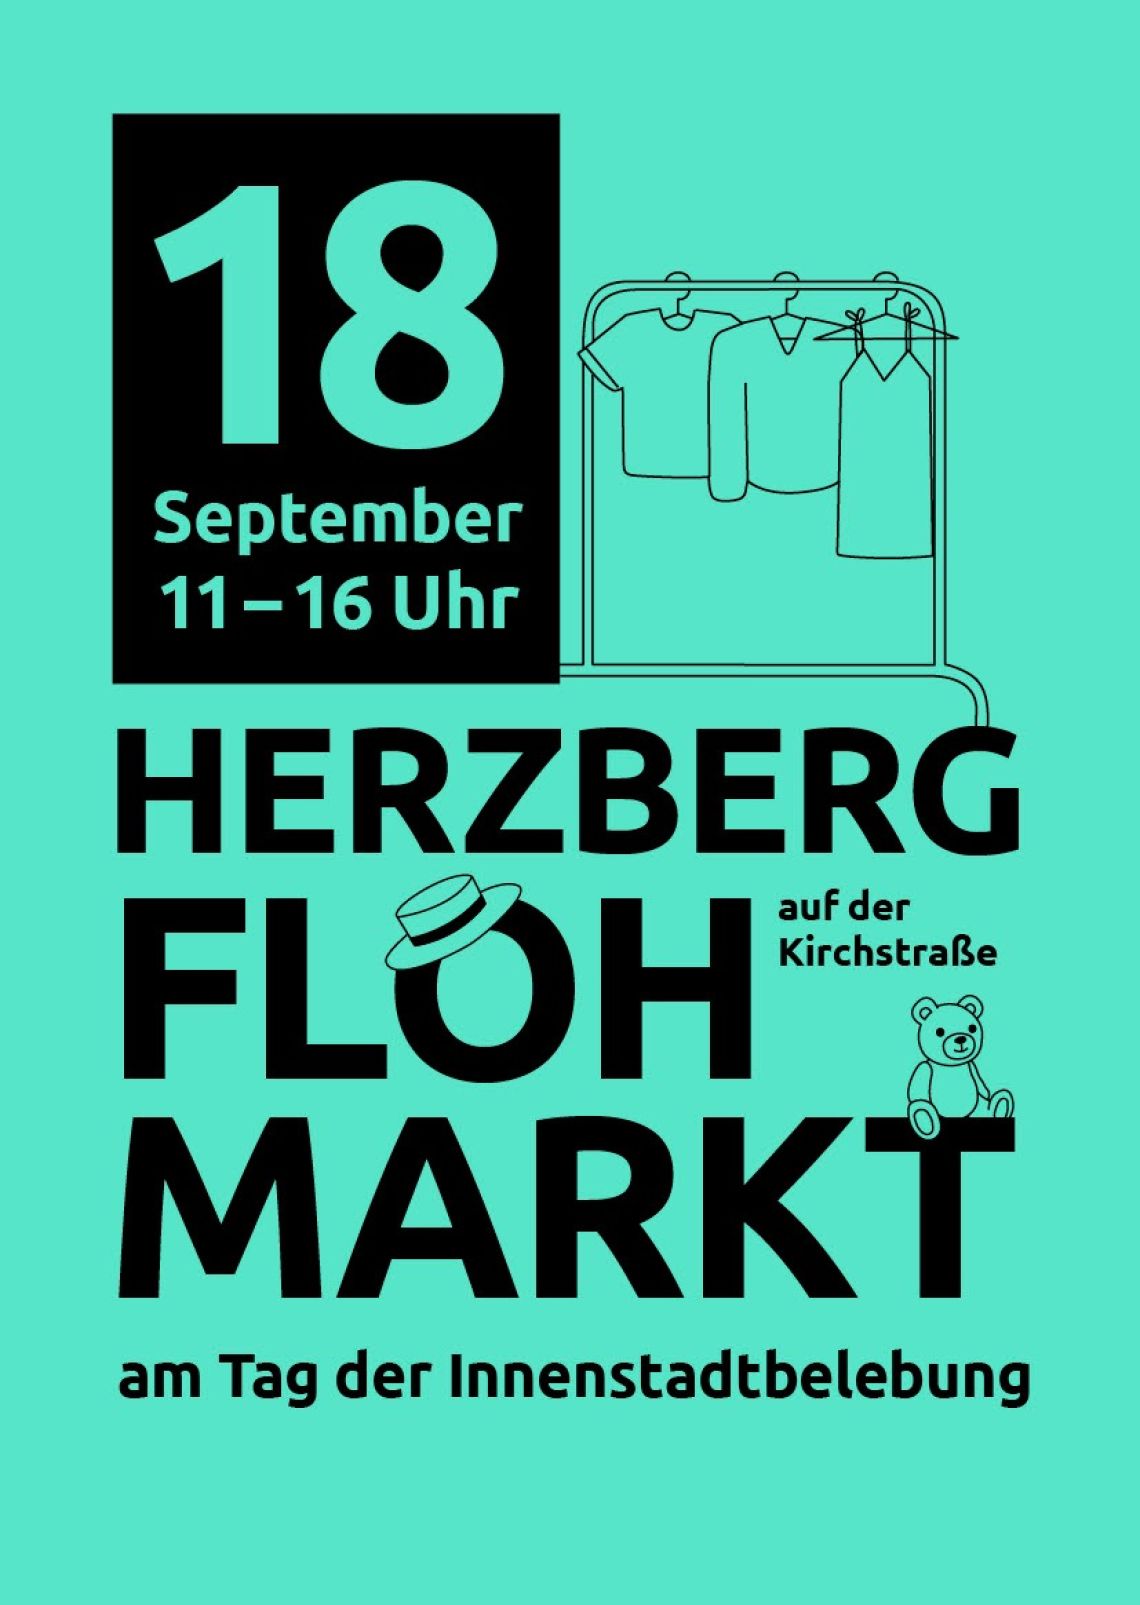 Herzberg Flohmarkt 